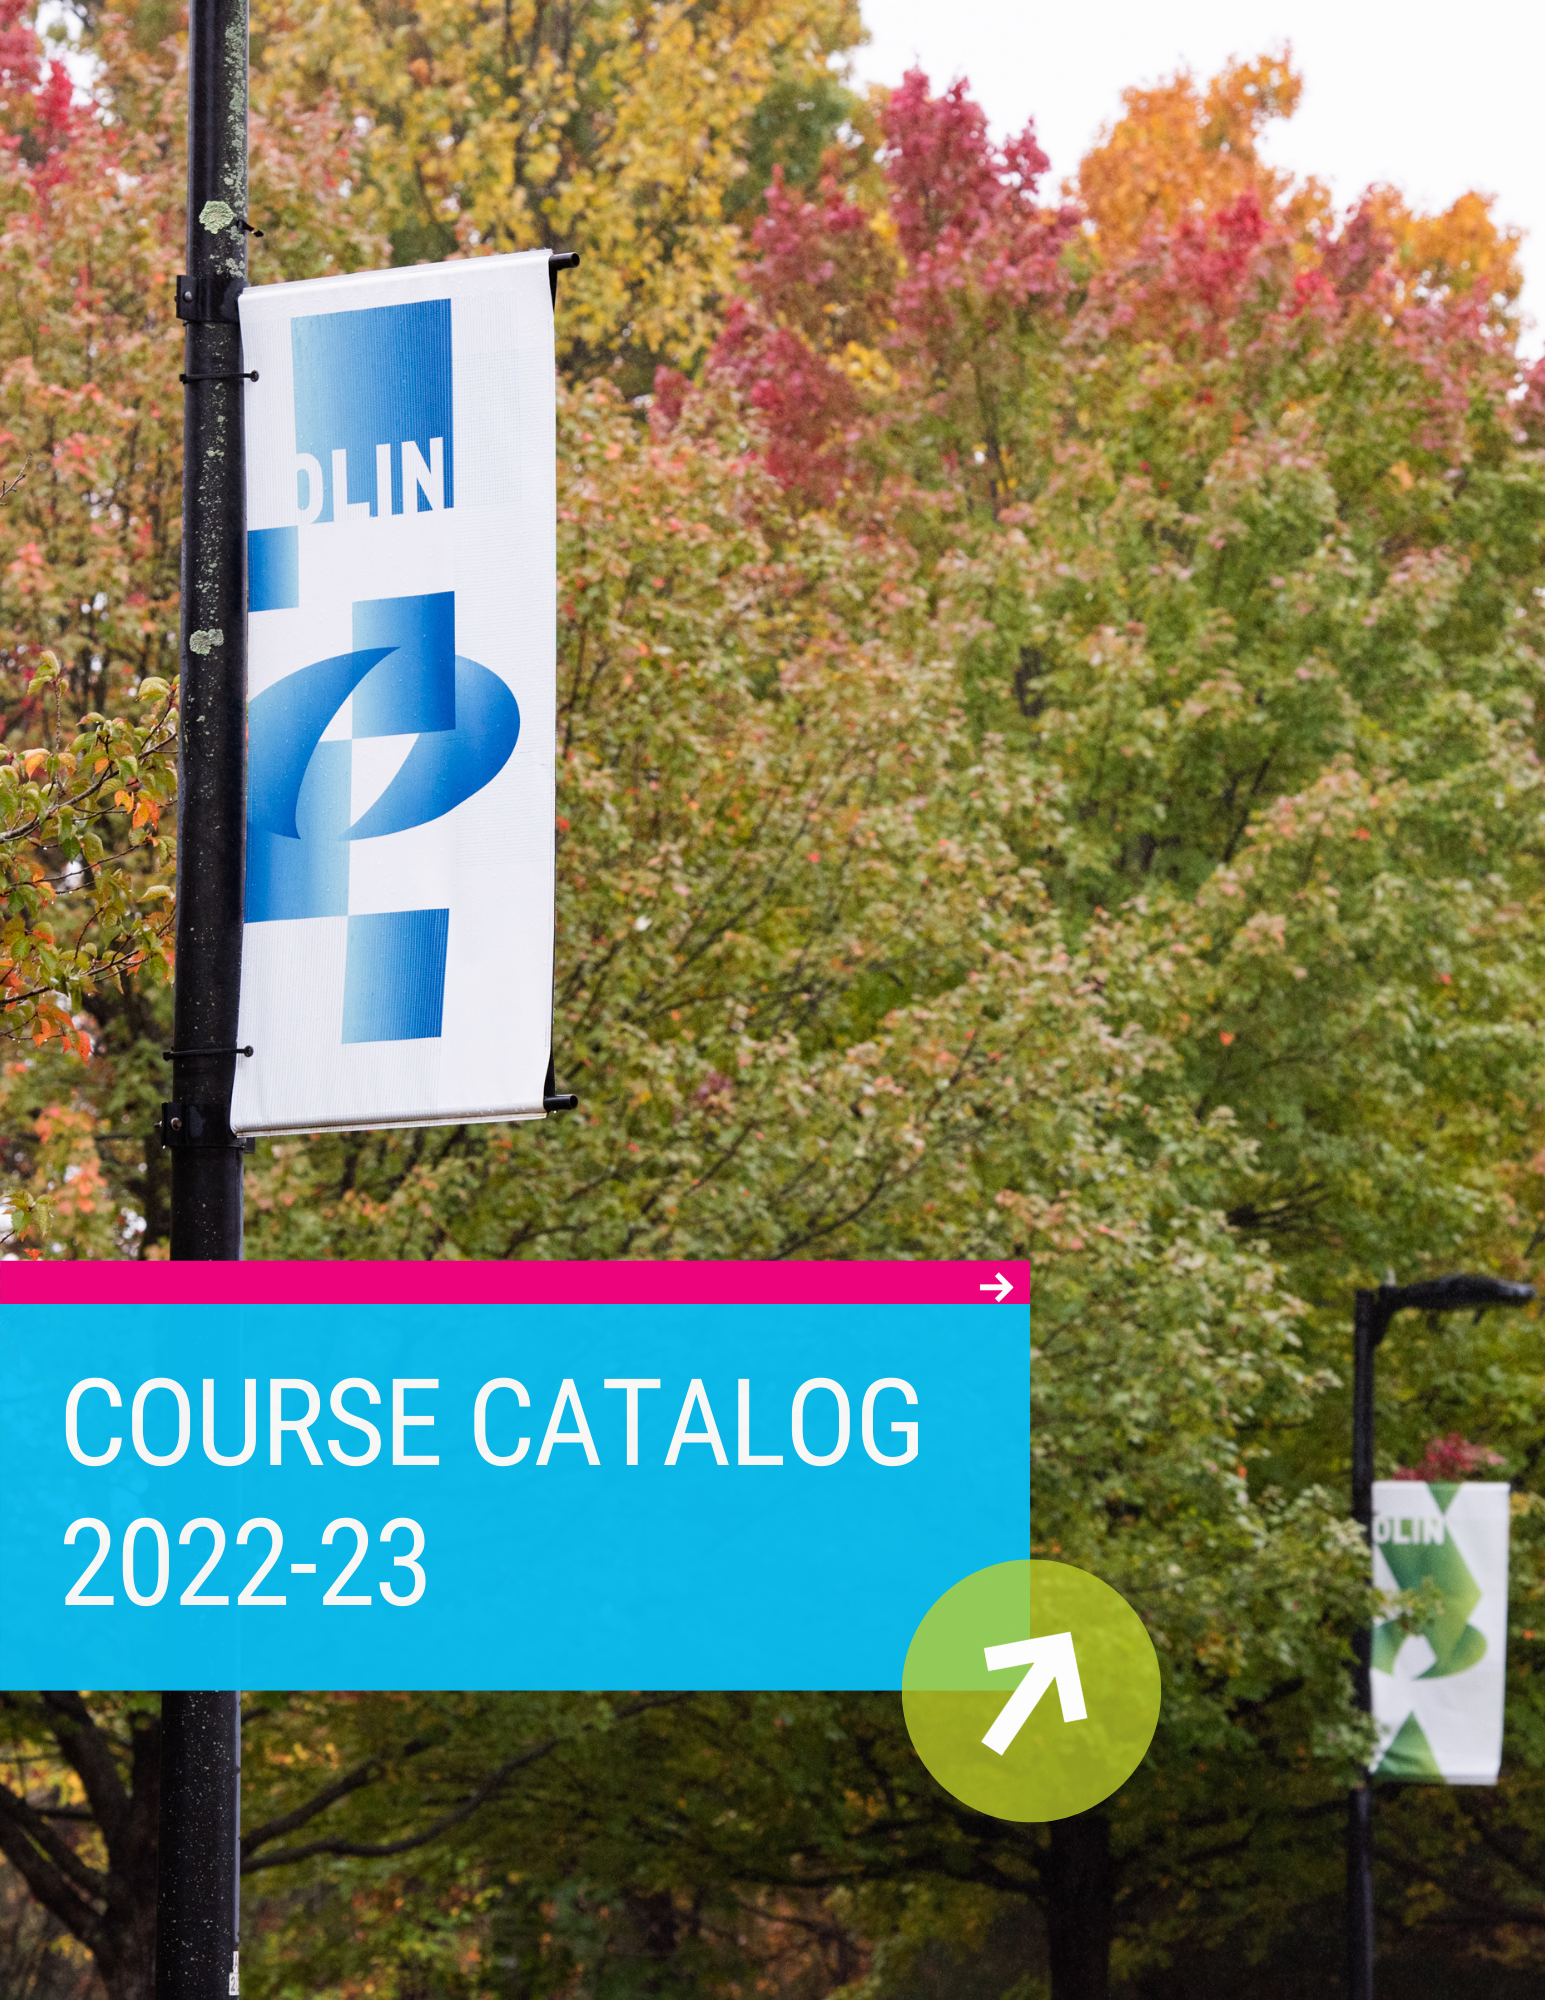 Course Catalog 2022-23